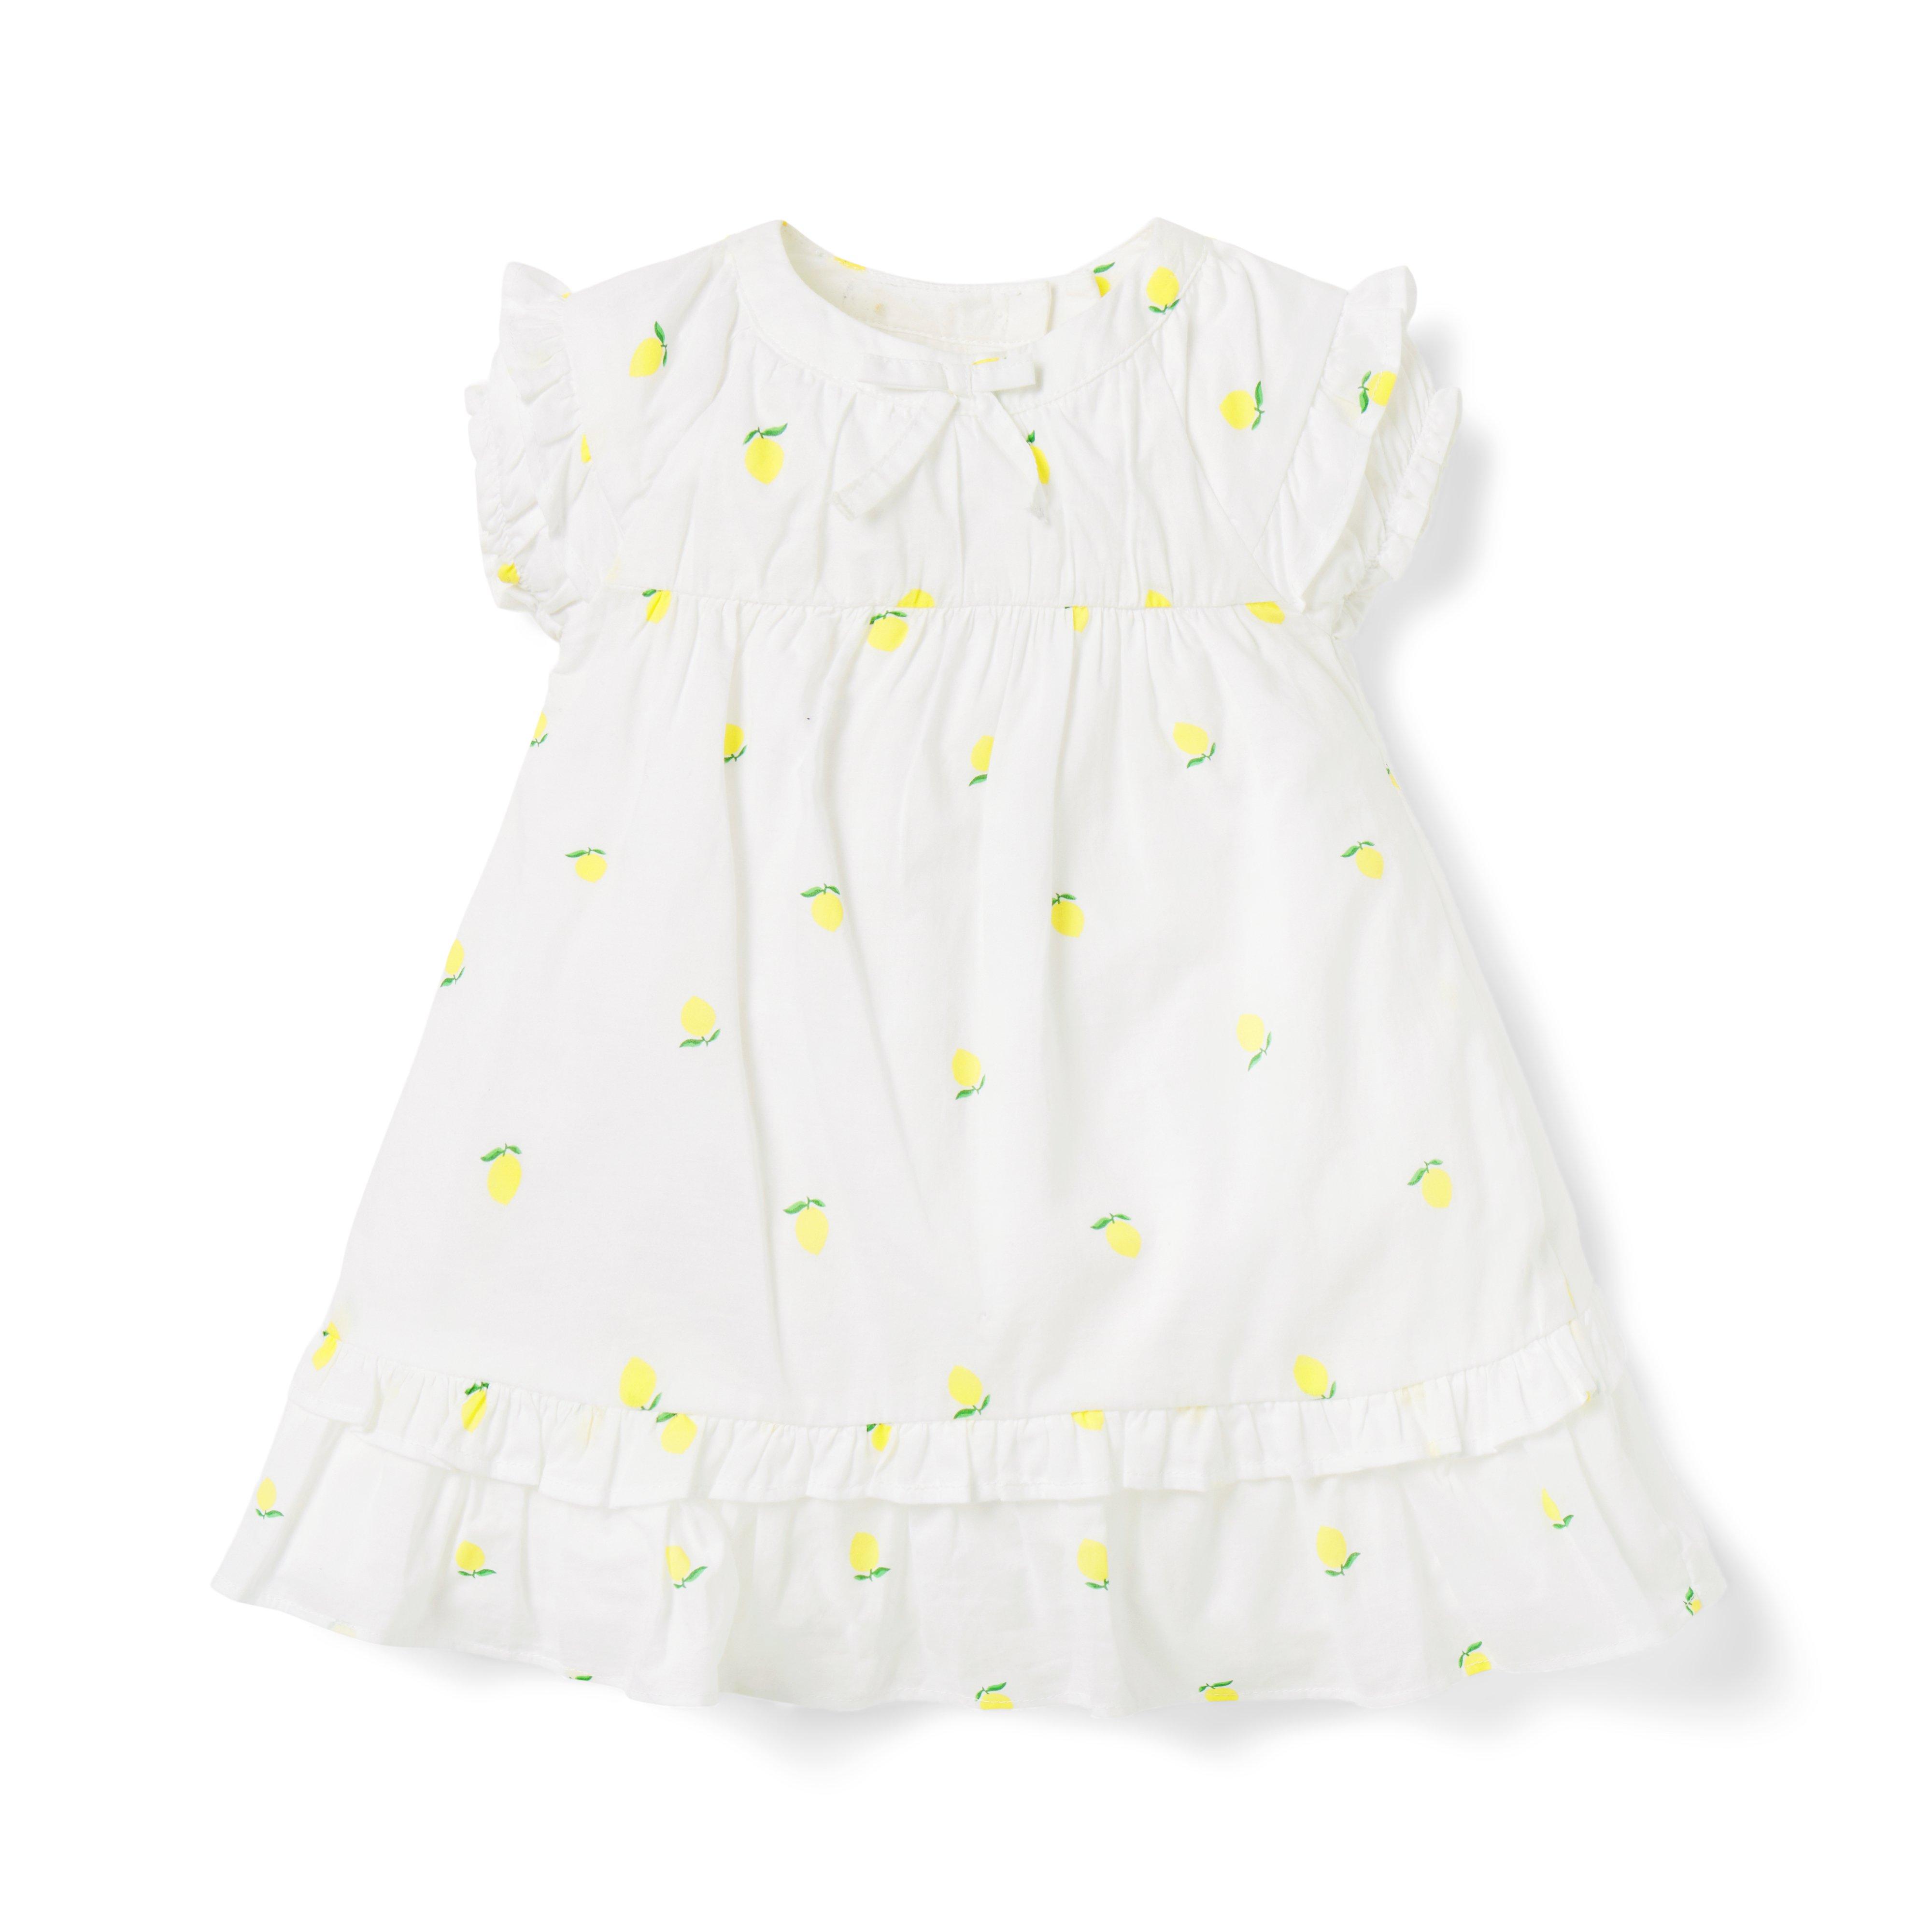 The Sunshine Lemon Baby Dress